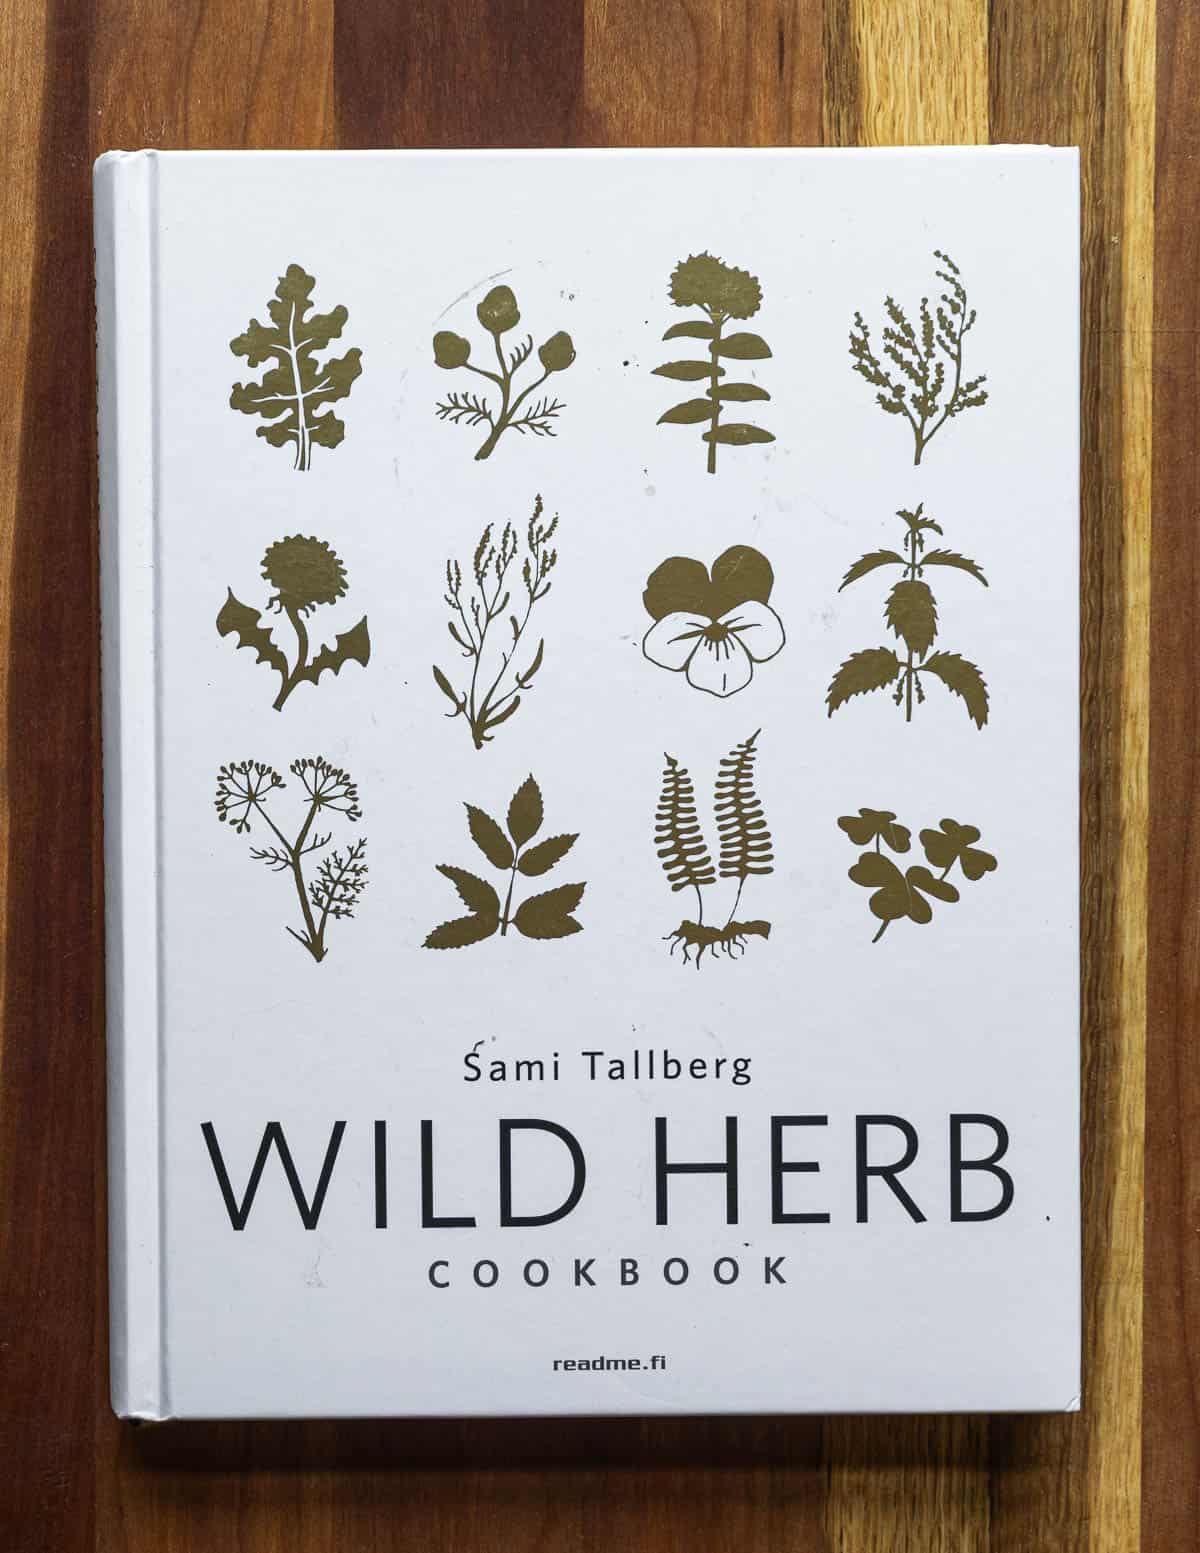 Chef Sami Tallberg's wild herb cookbook. 